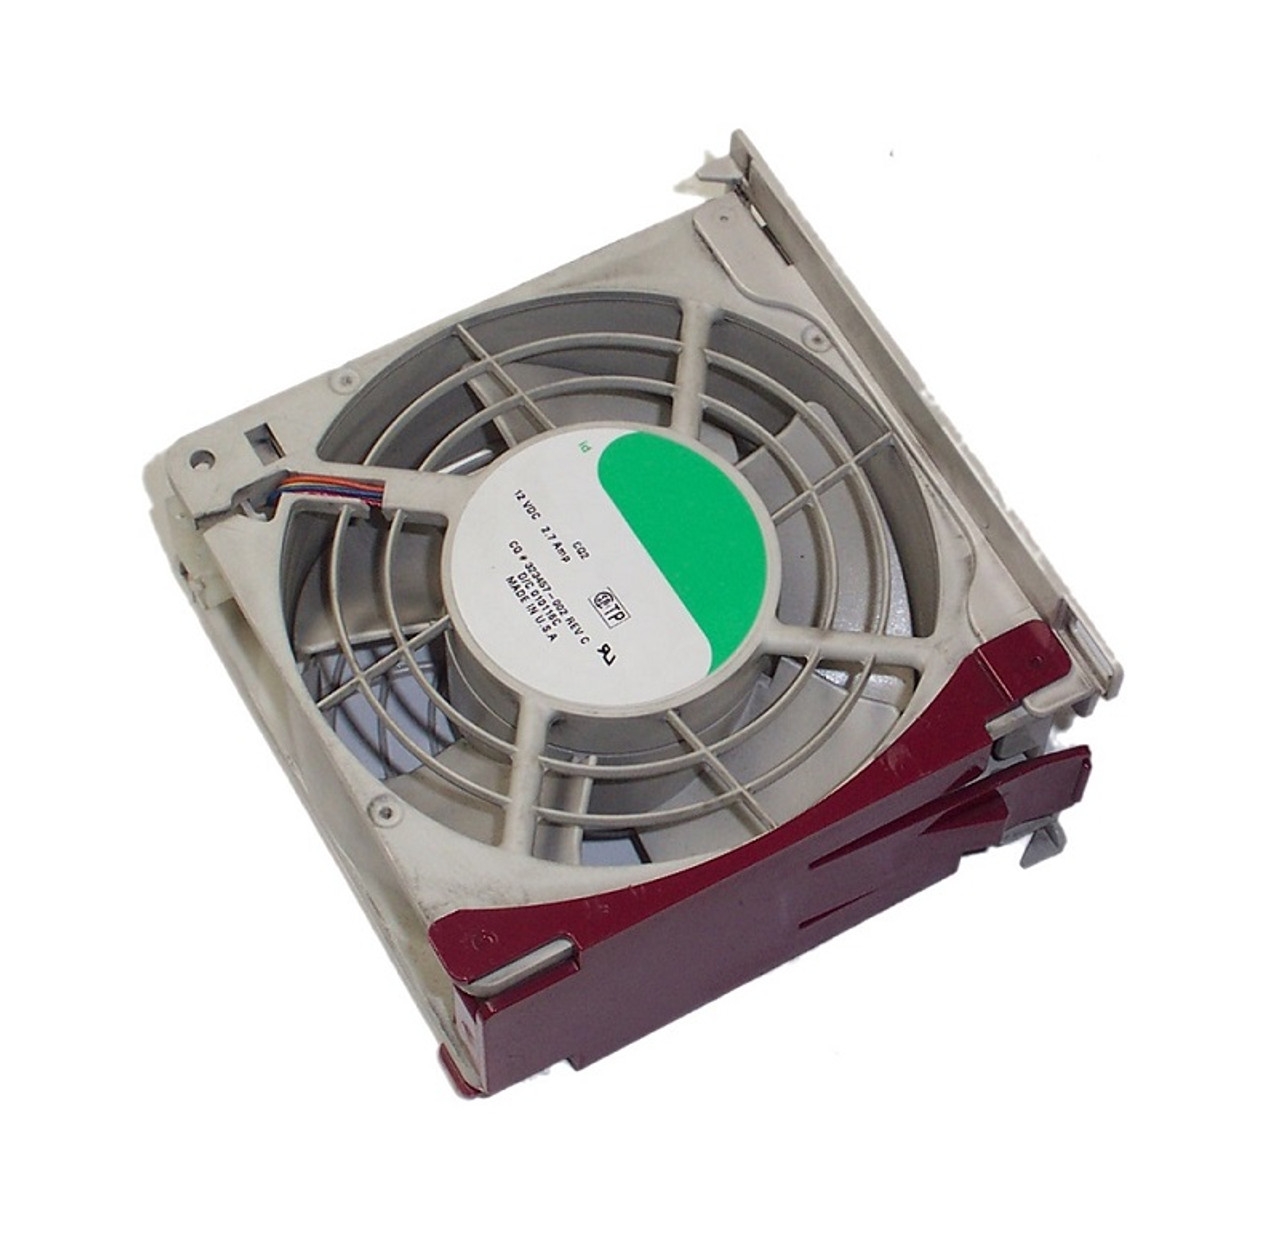 486206-001 - HP Single Active Cool Fan Option Kit for ProLiant BLade Center Blc7000